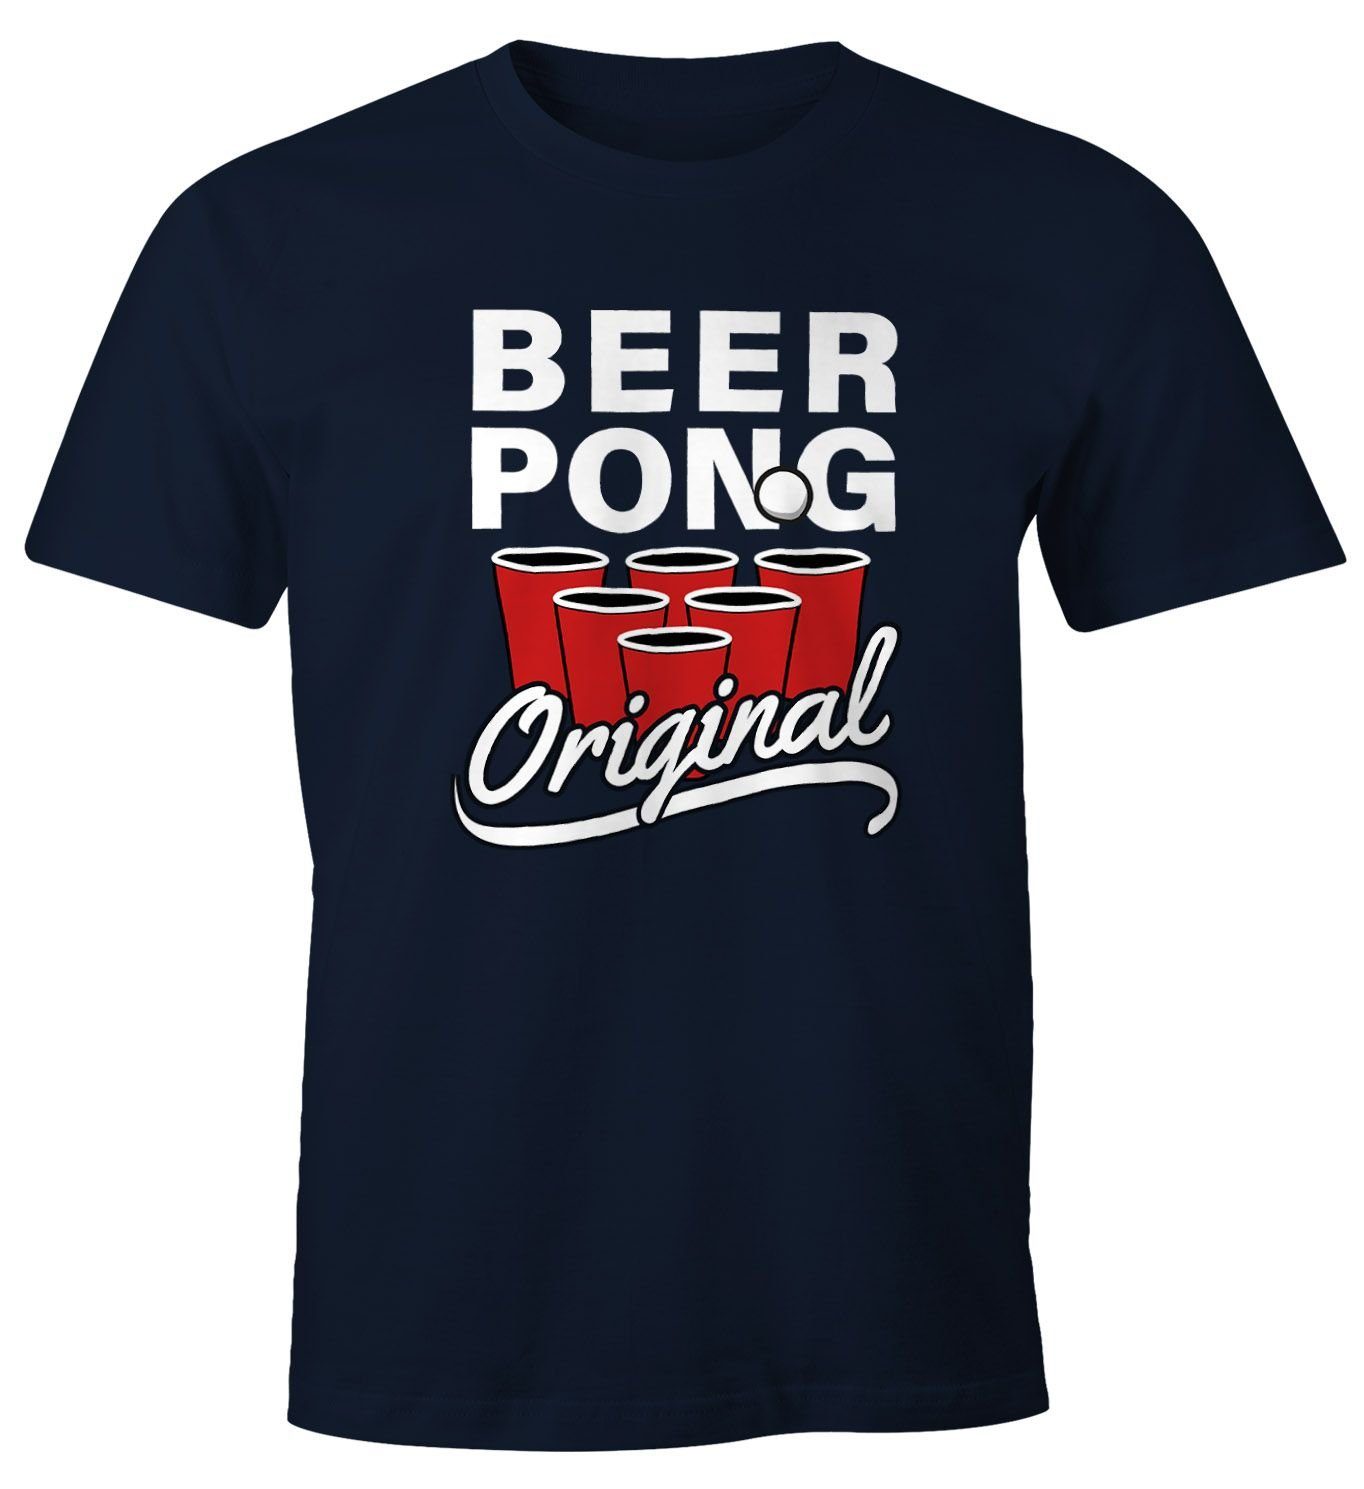 MoonWorks Print-Shirt Herren T-Shirt Beer navy Pong Moonworks® mit Print Original Bier Fun-Shirt